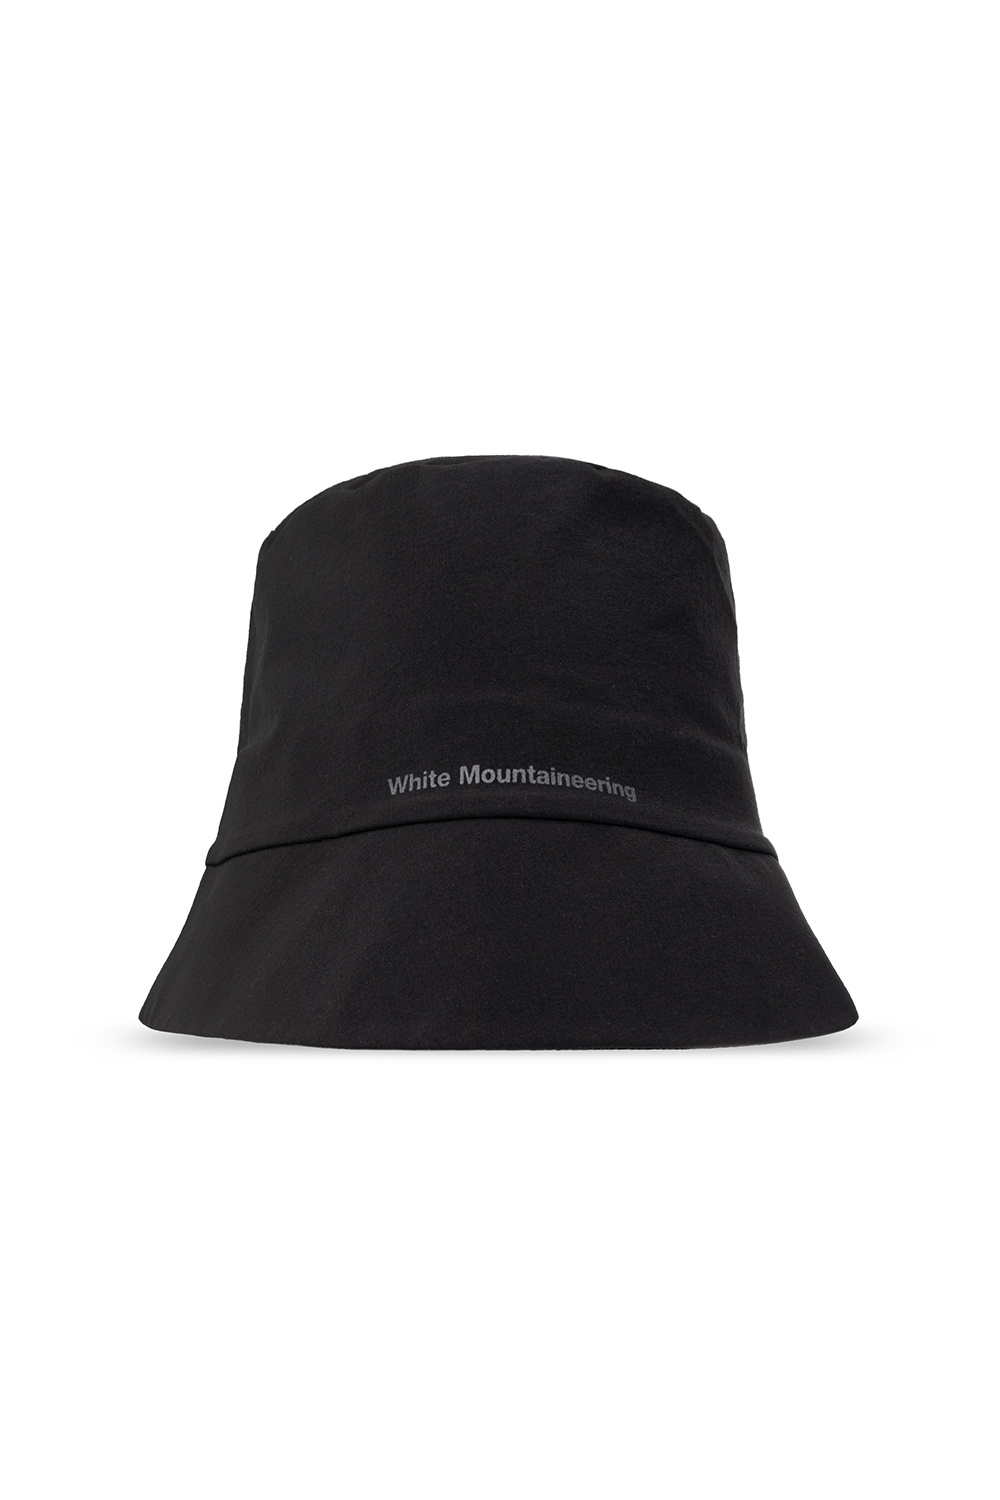 White Mountaineering Bucket krystallogo hat with logo